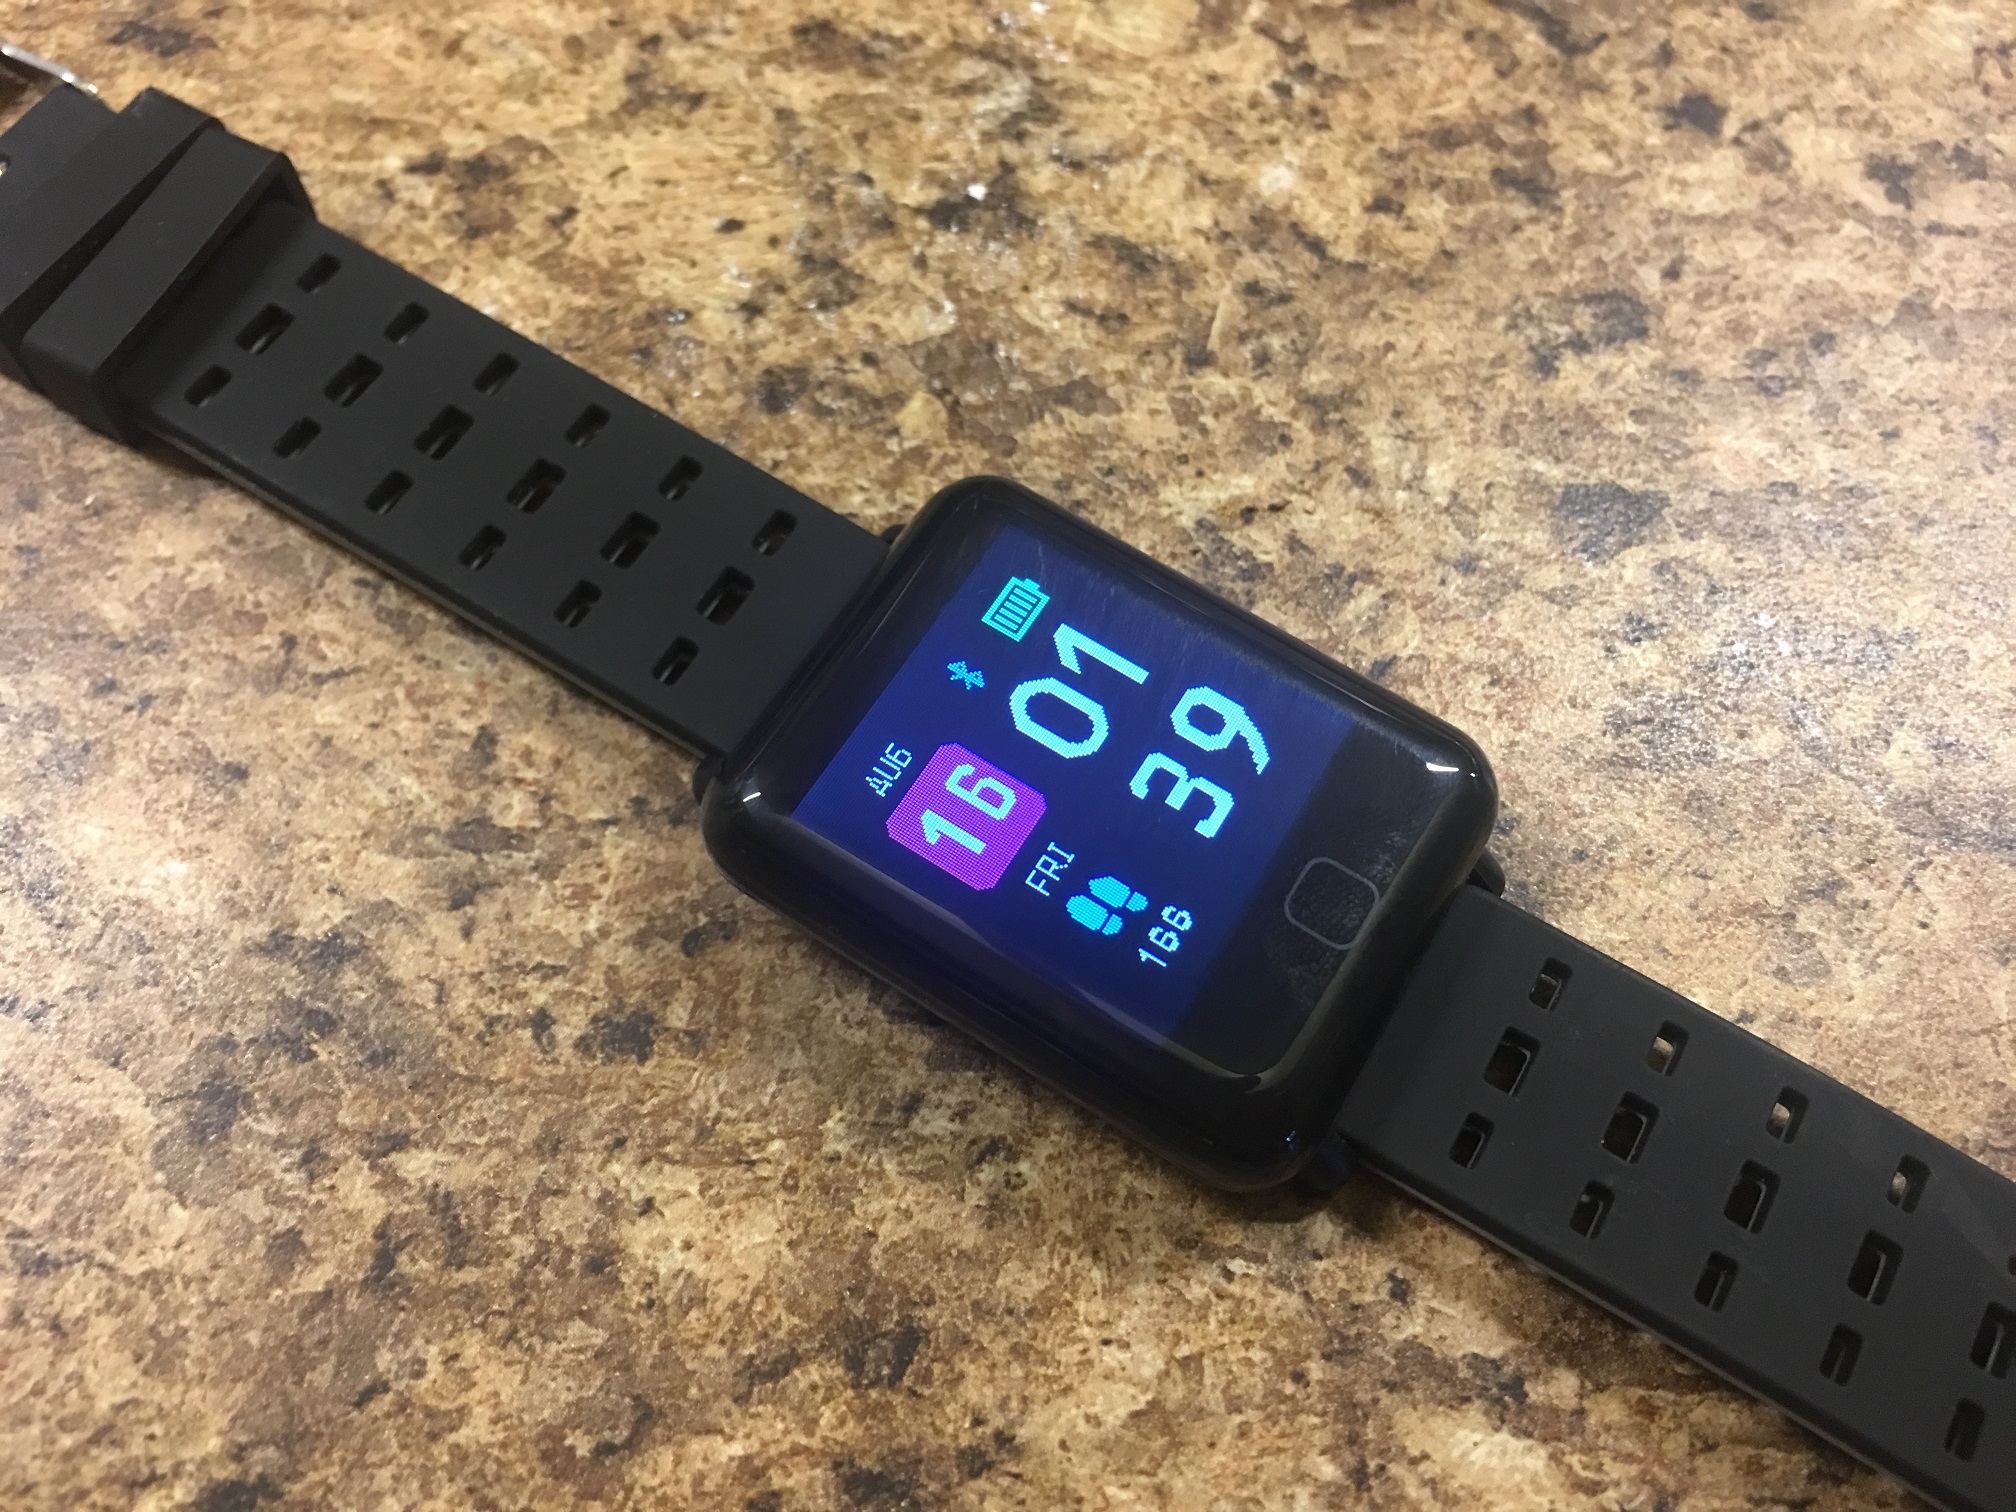 My new favorite smart watch